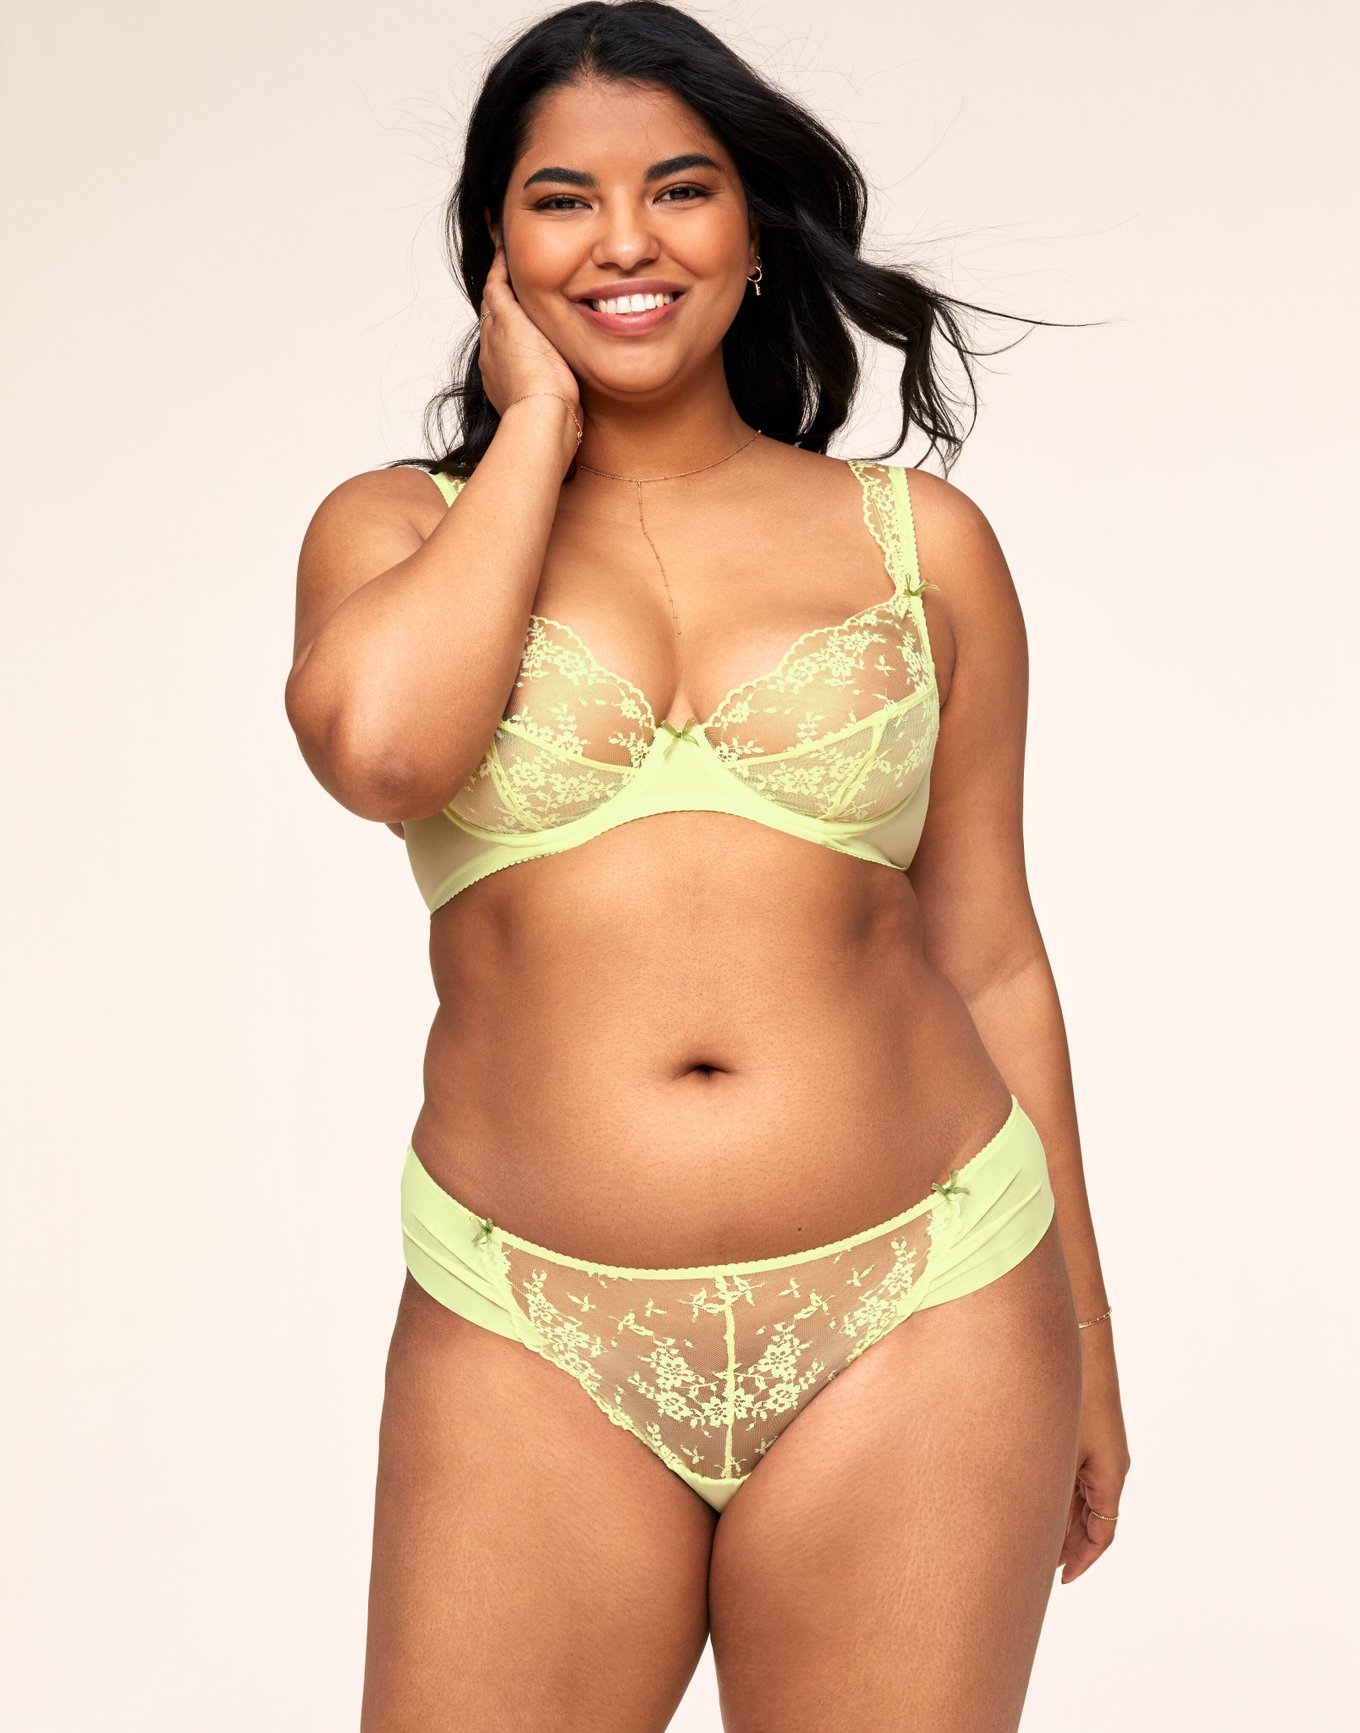 chubby indian girl in yellow bra big boobs and black underwear